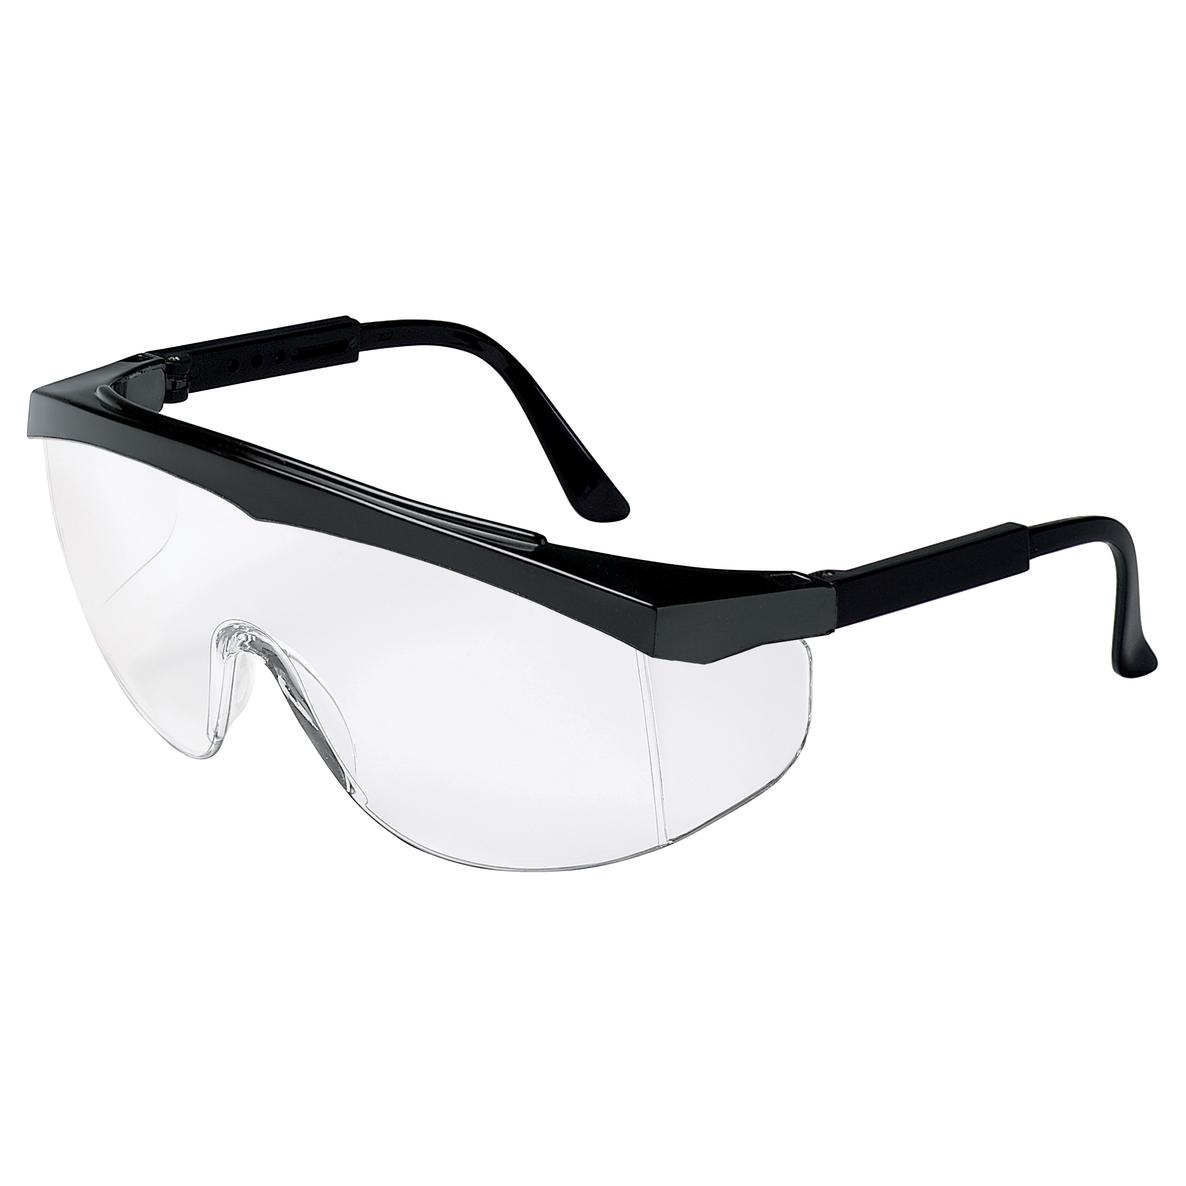 INTEGRA Safety Glasses Clear Lens Adjustable Temples Multi-Color Frame 120 Pcs 